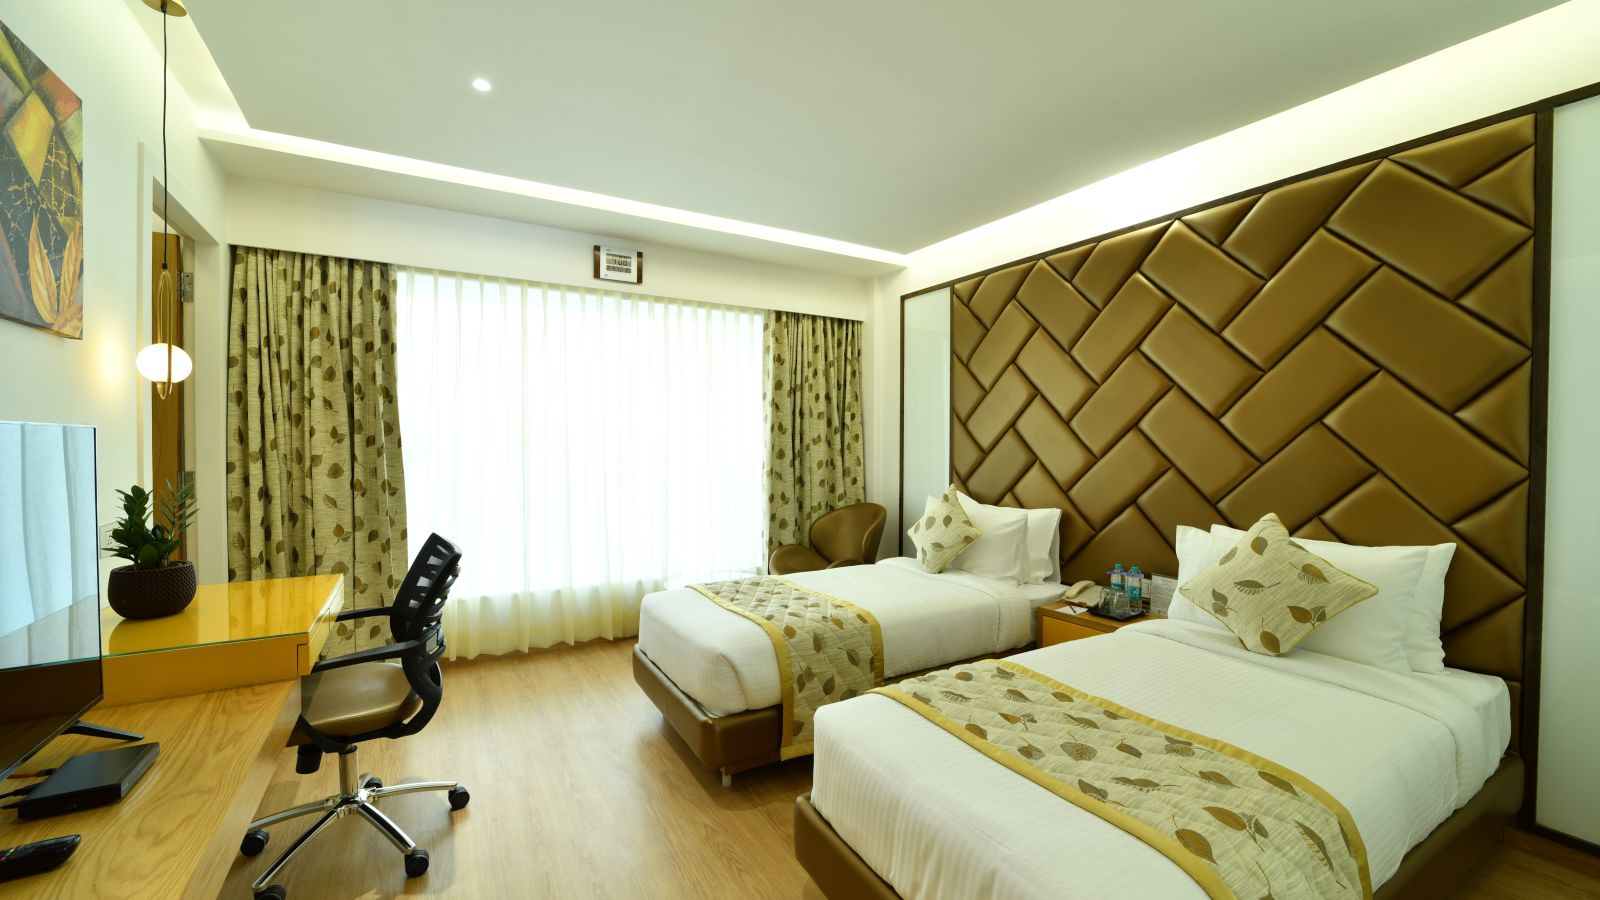 President Kumara Park - A spacious bedroom 7 ukxntj